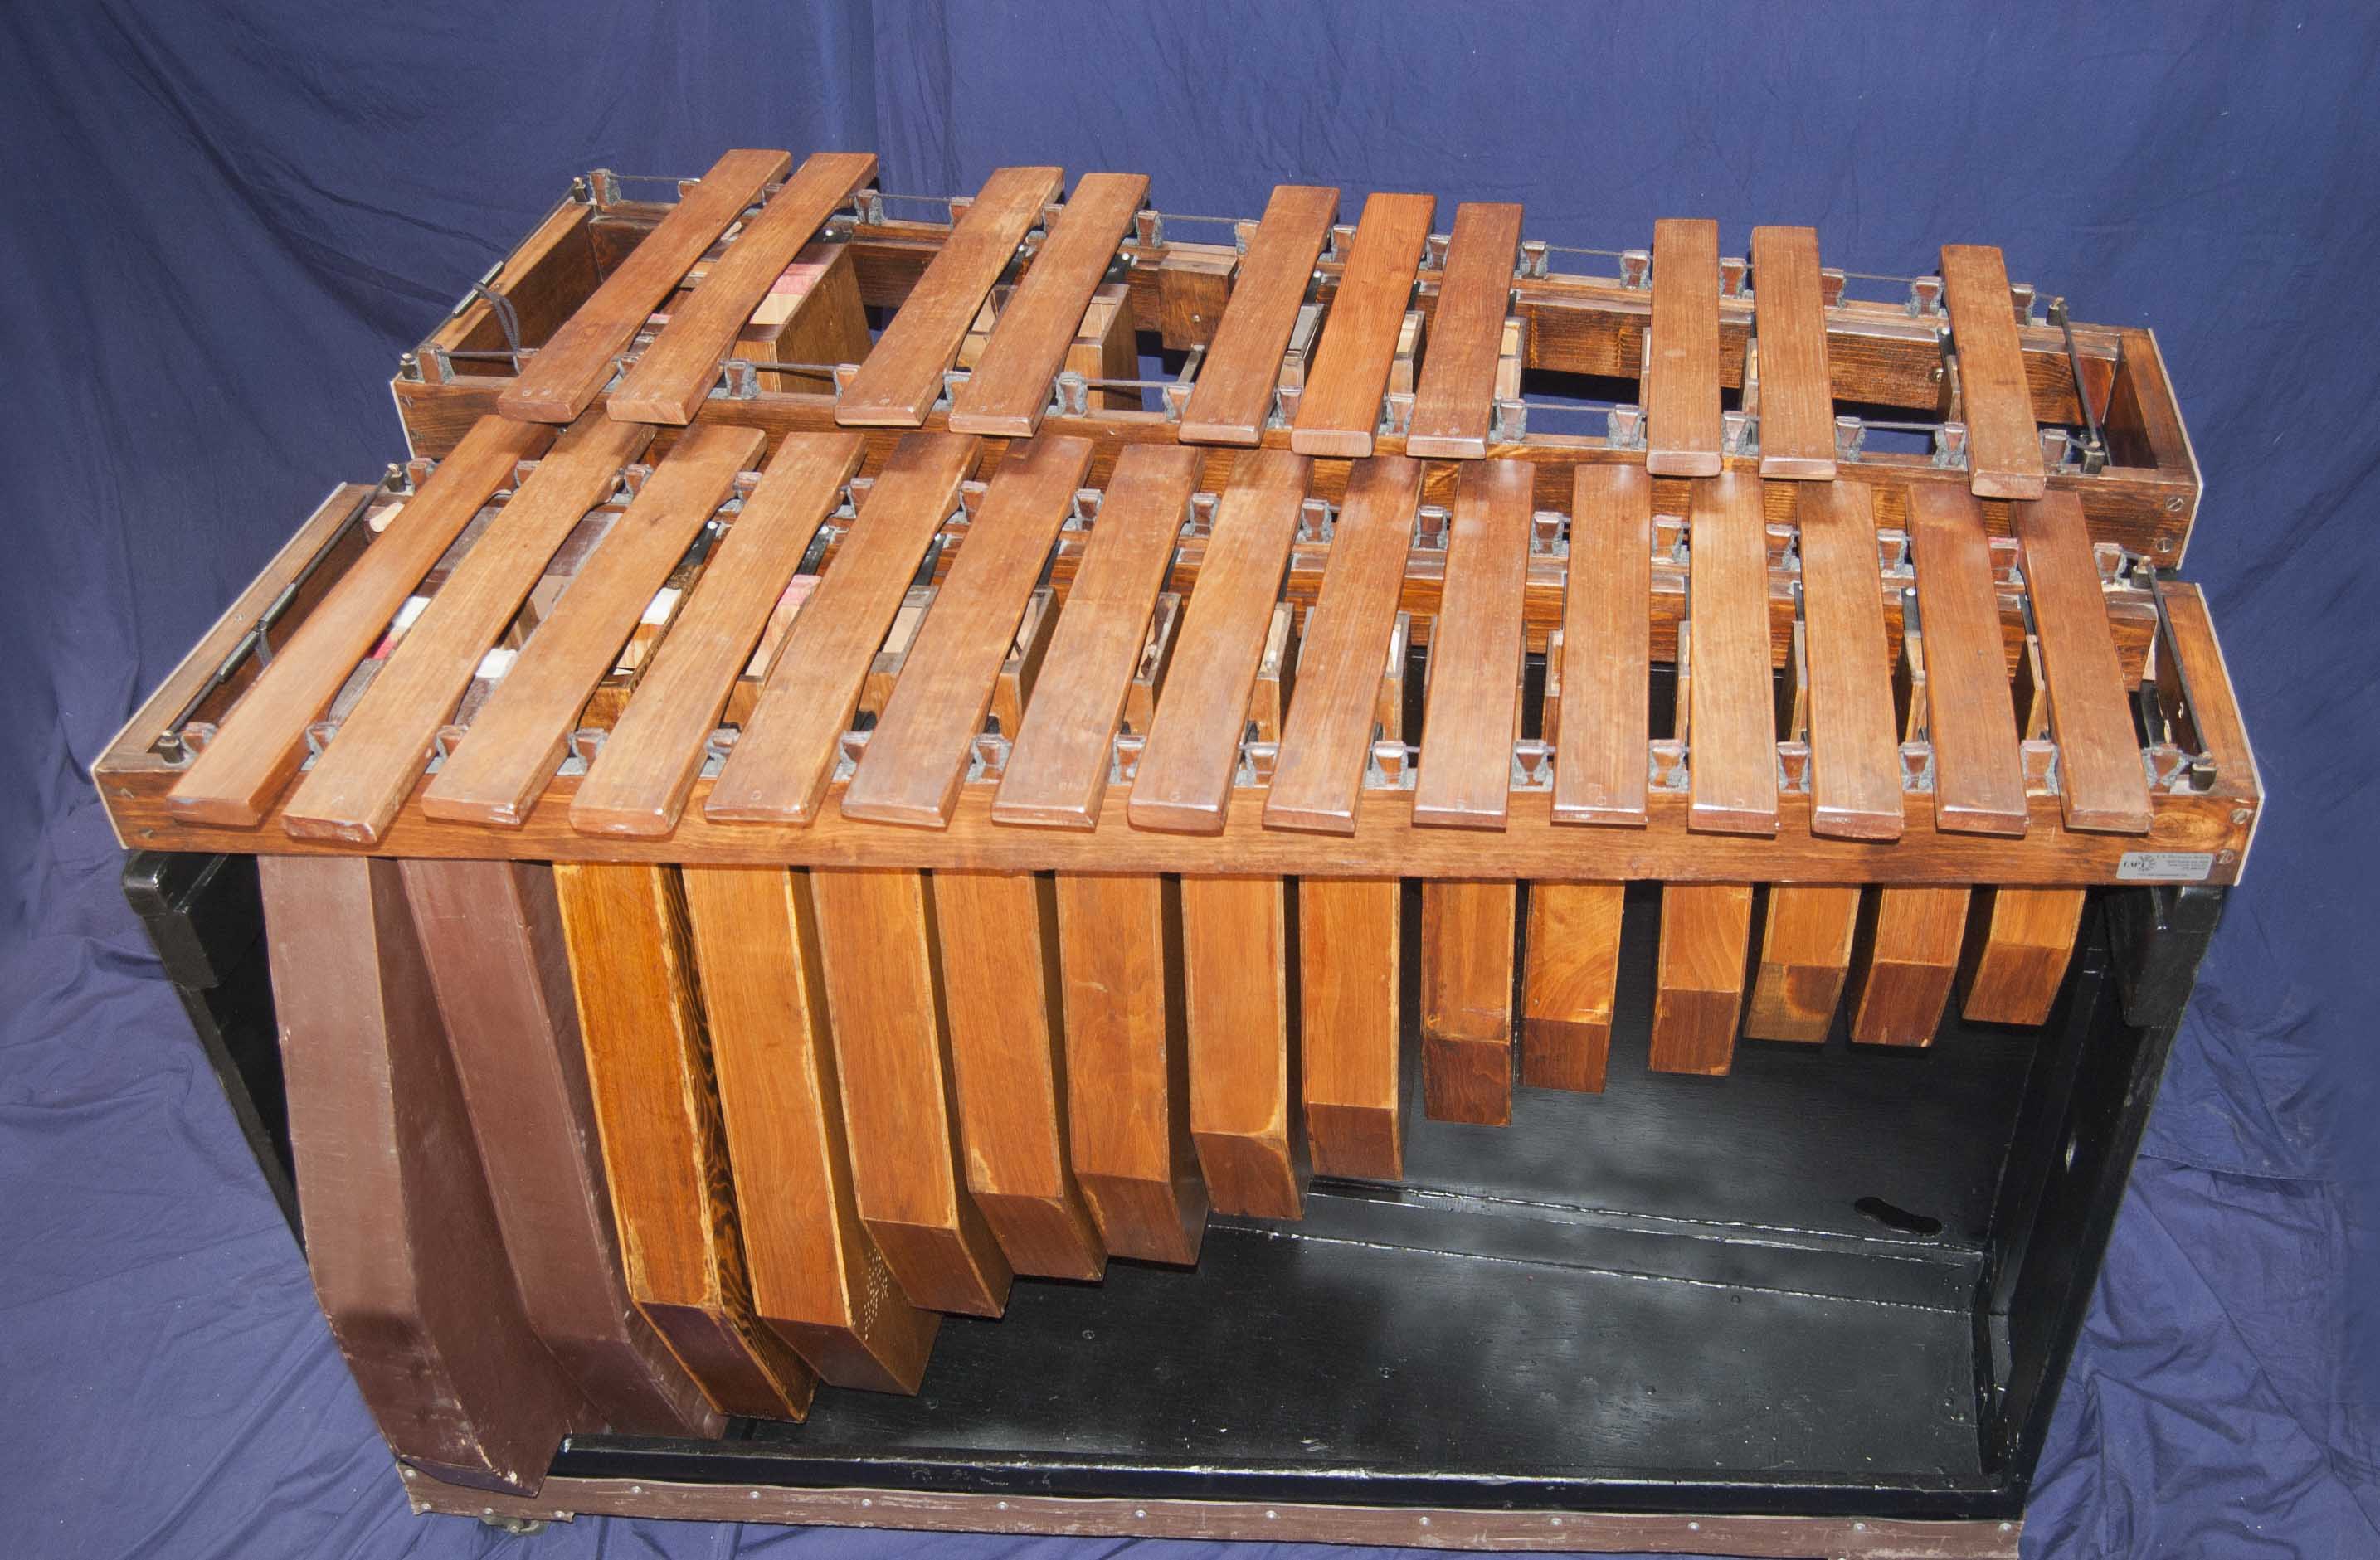 Contra Bass Marimba fabricada en madera con dos niveles, uno para tonos enteros y otro para tonos medios.